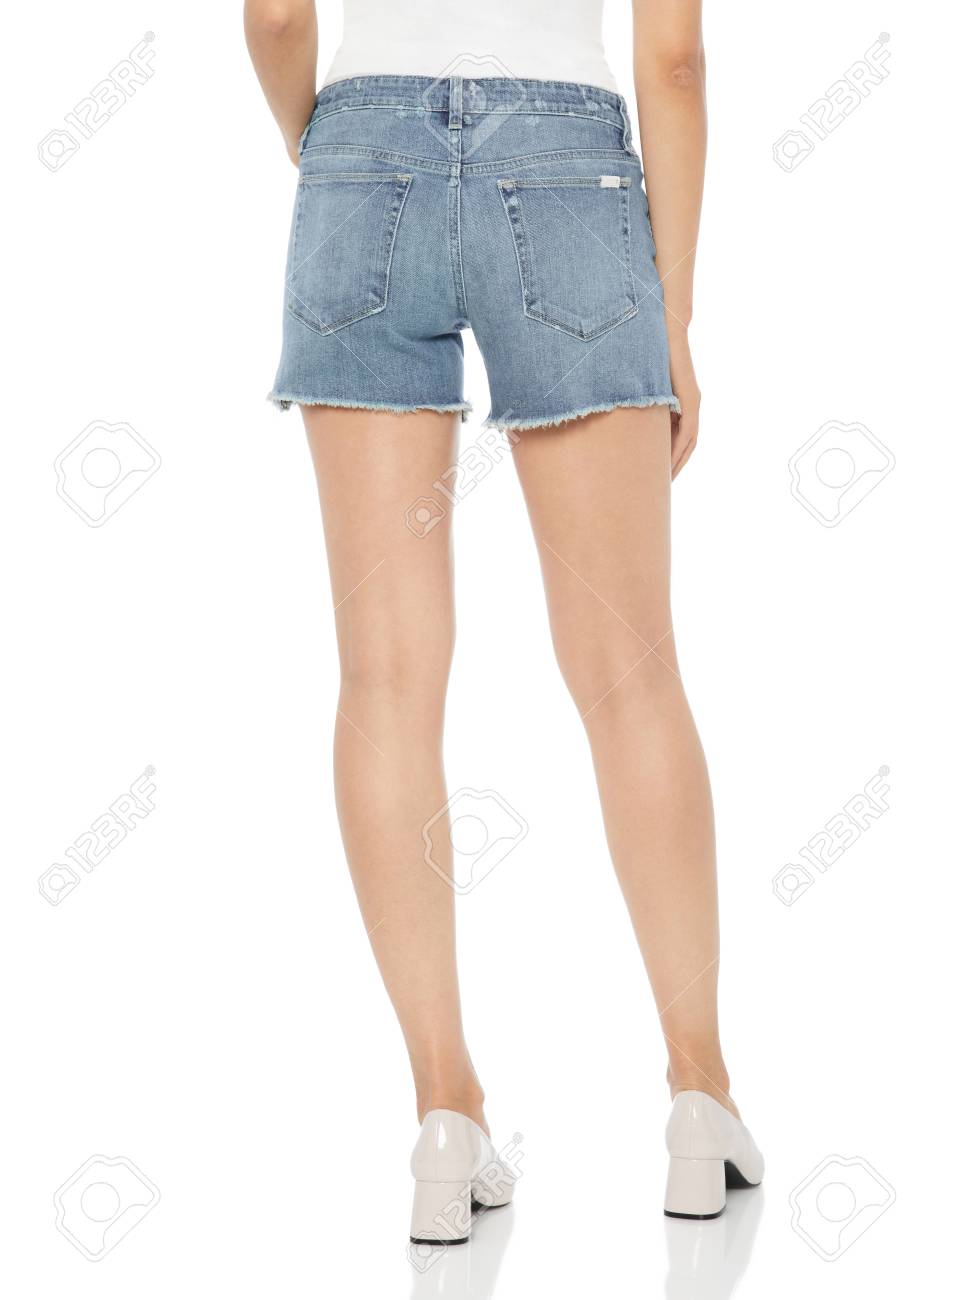 High waisted cut off jean shorts